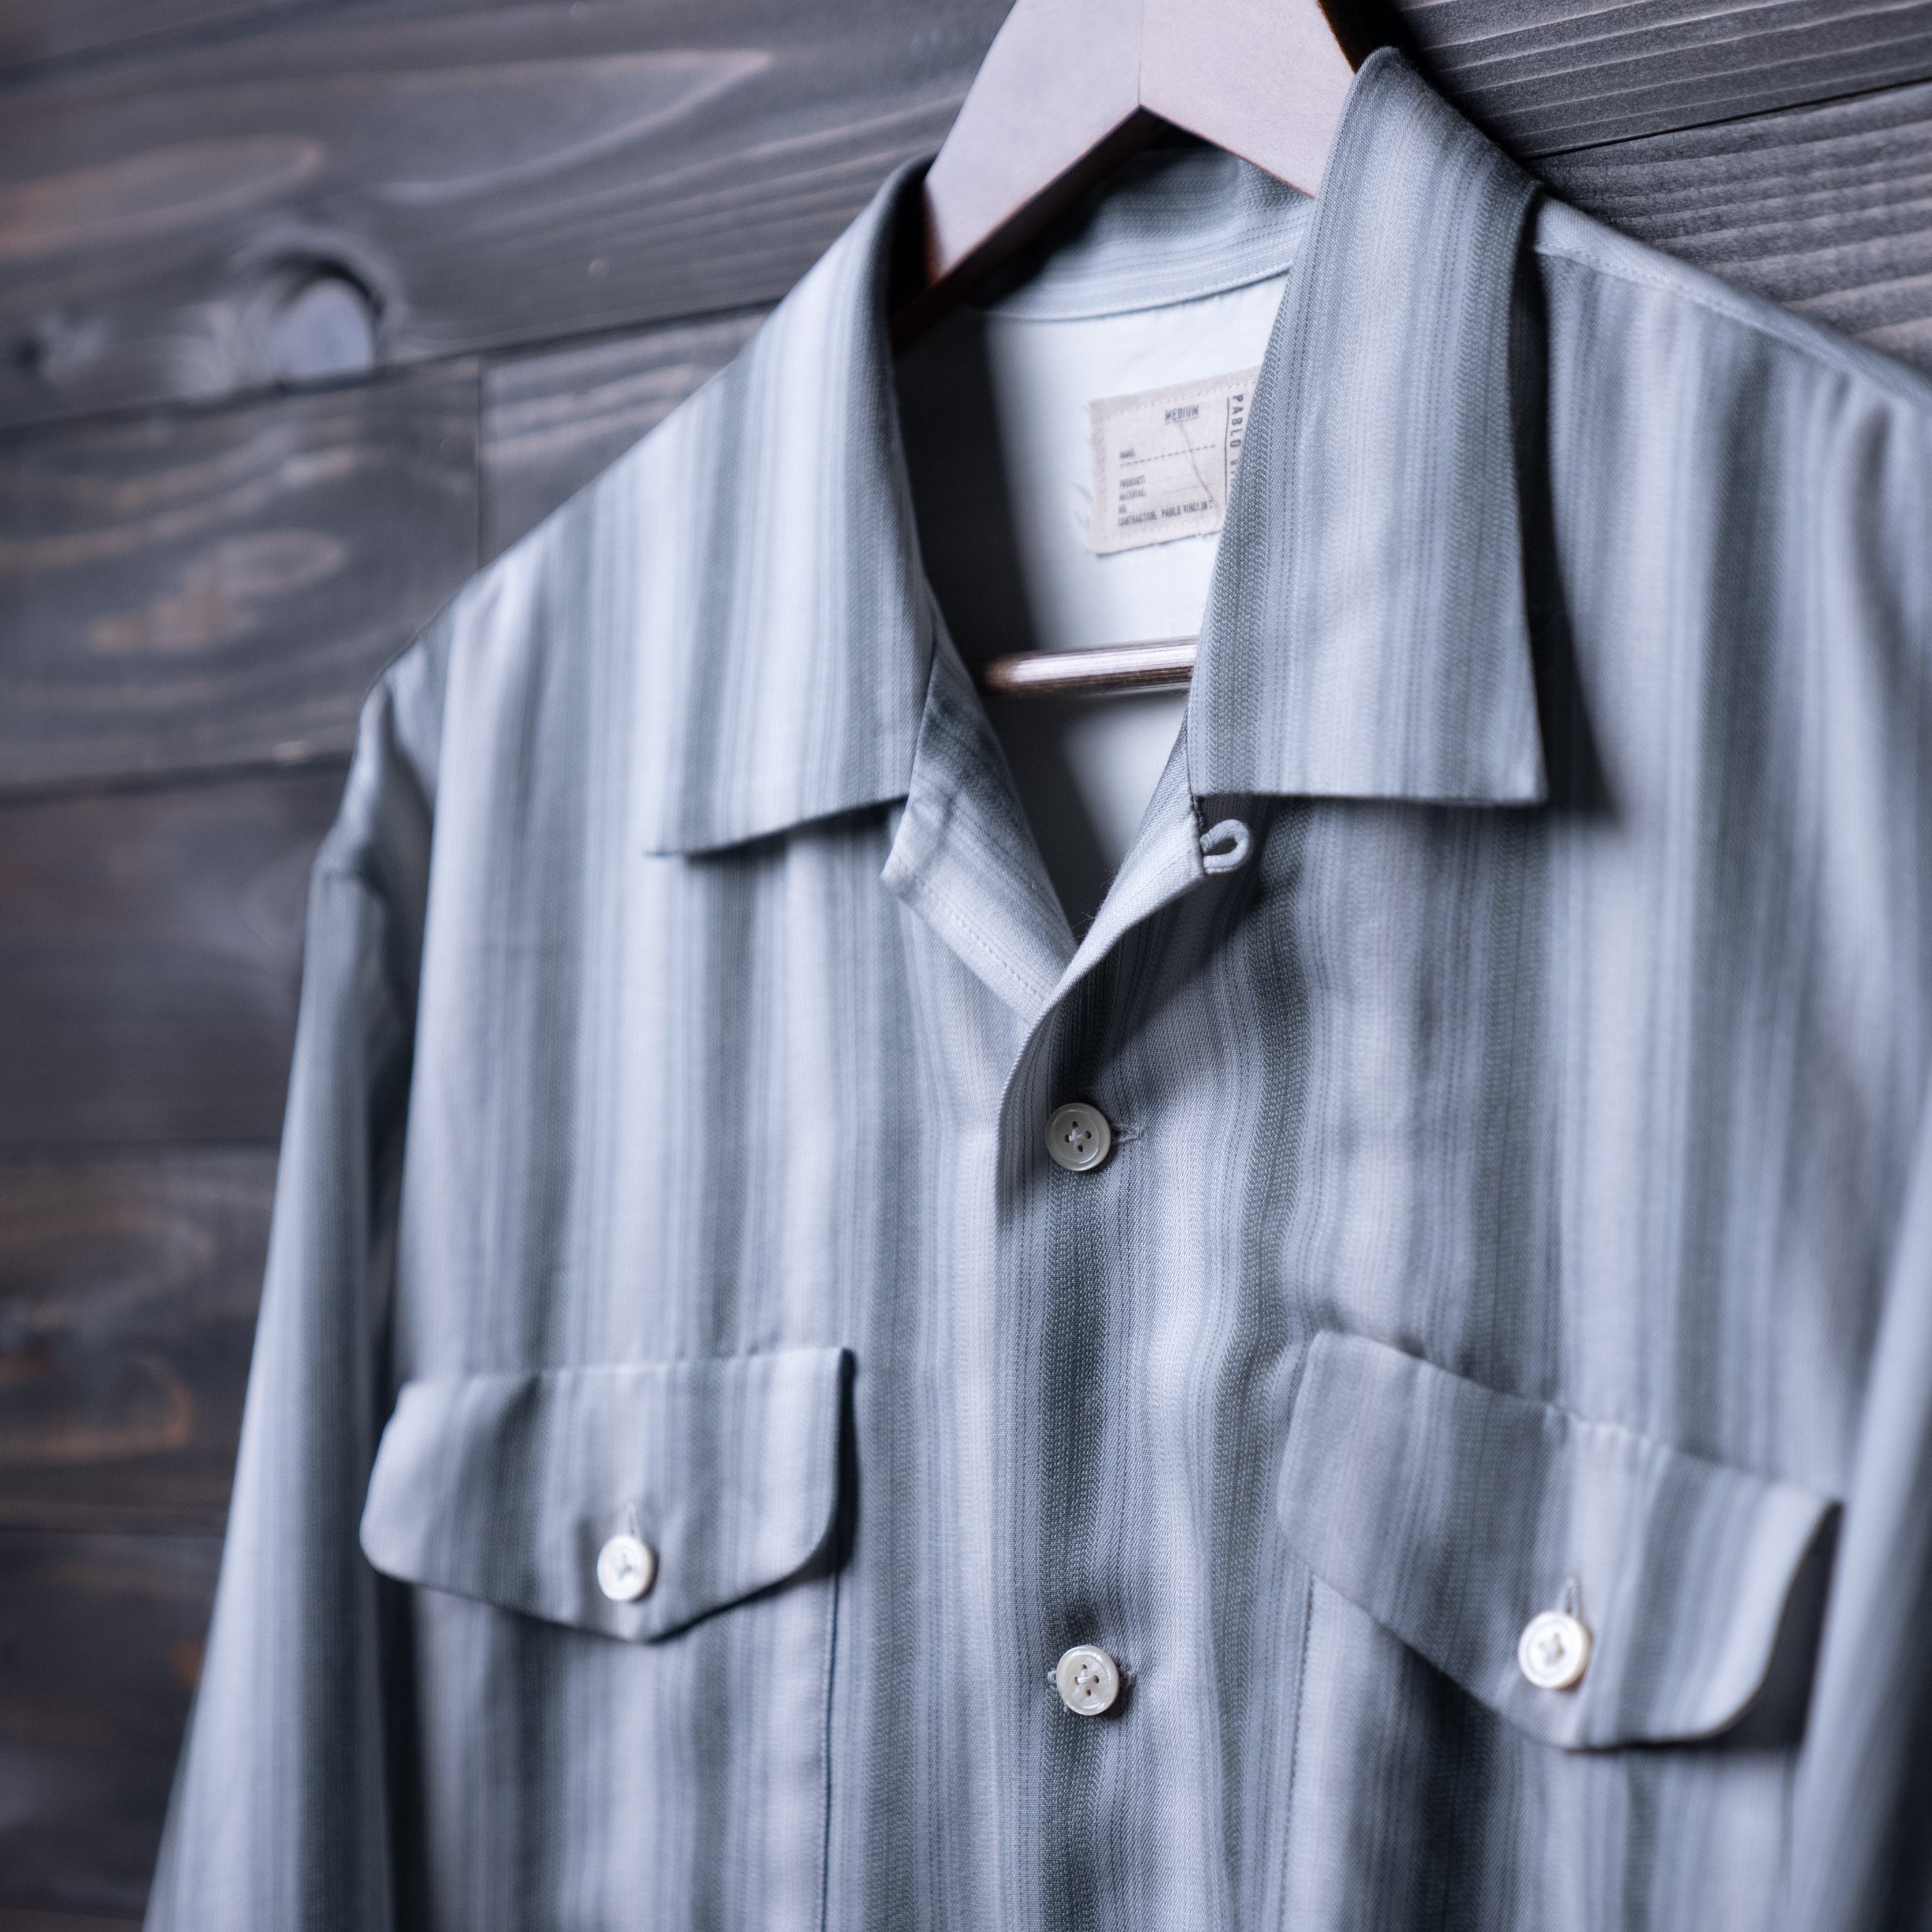 PABLO VINCI Open collar shirt リヨセルシャツkinema - シャツ